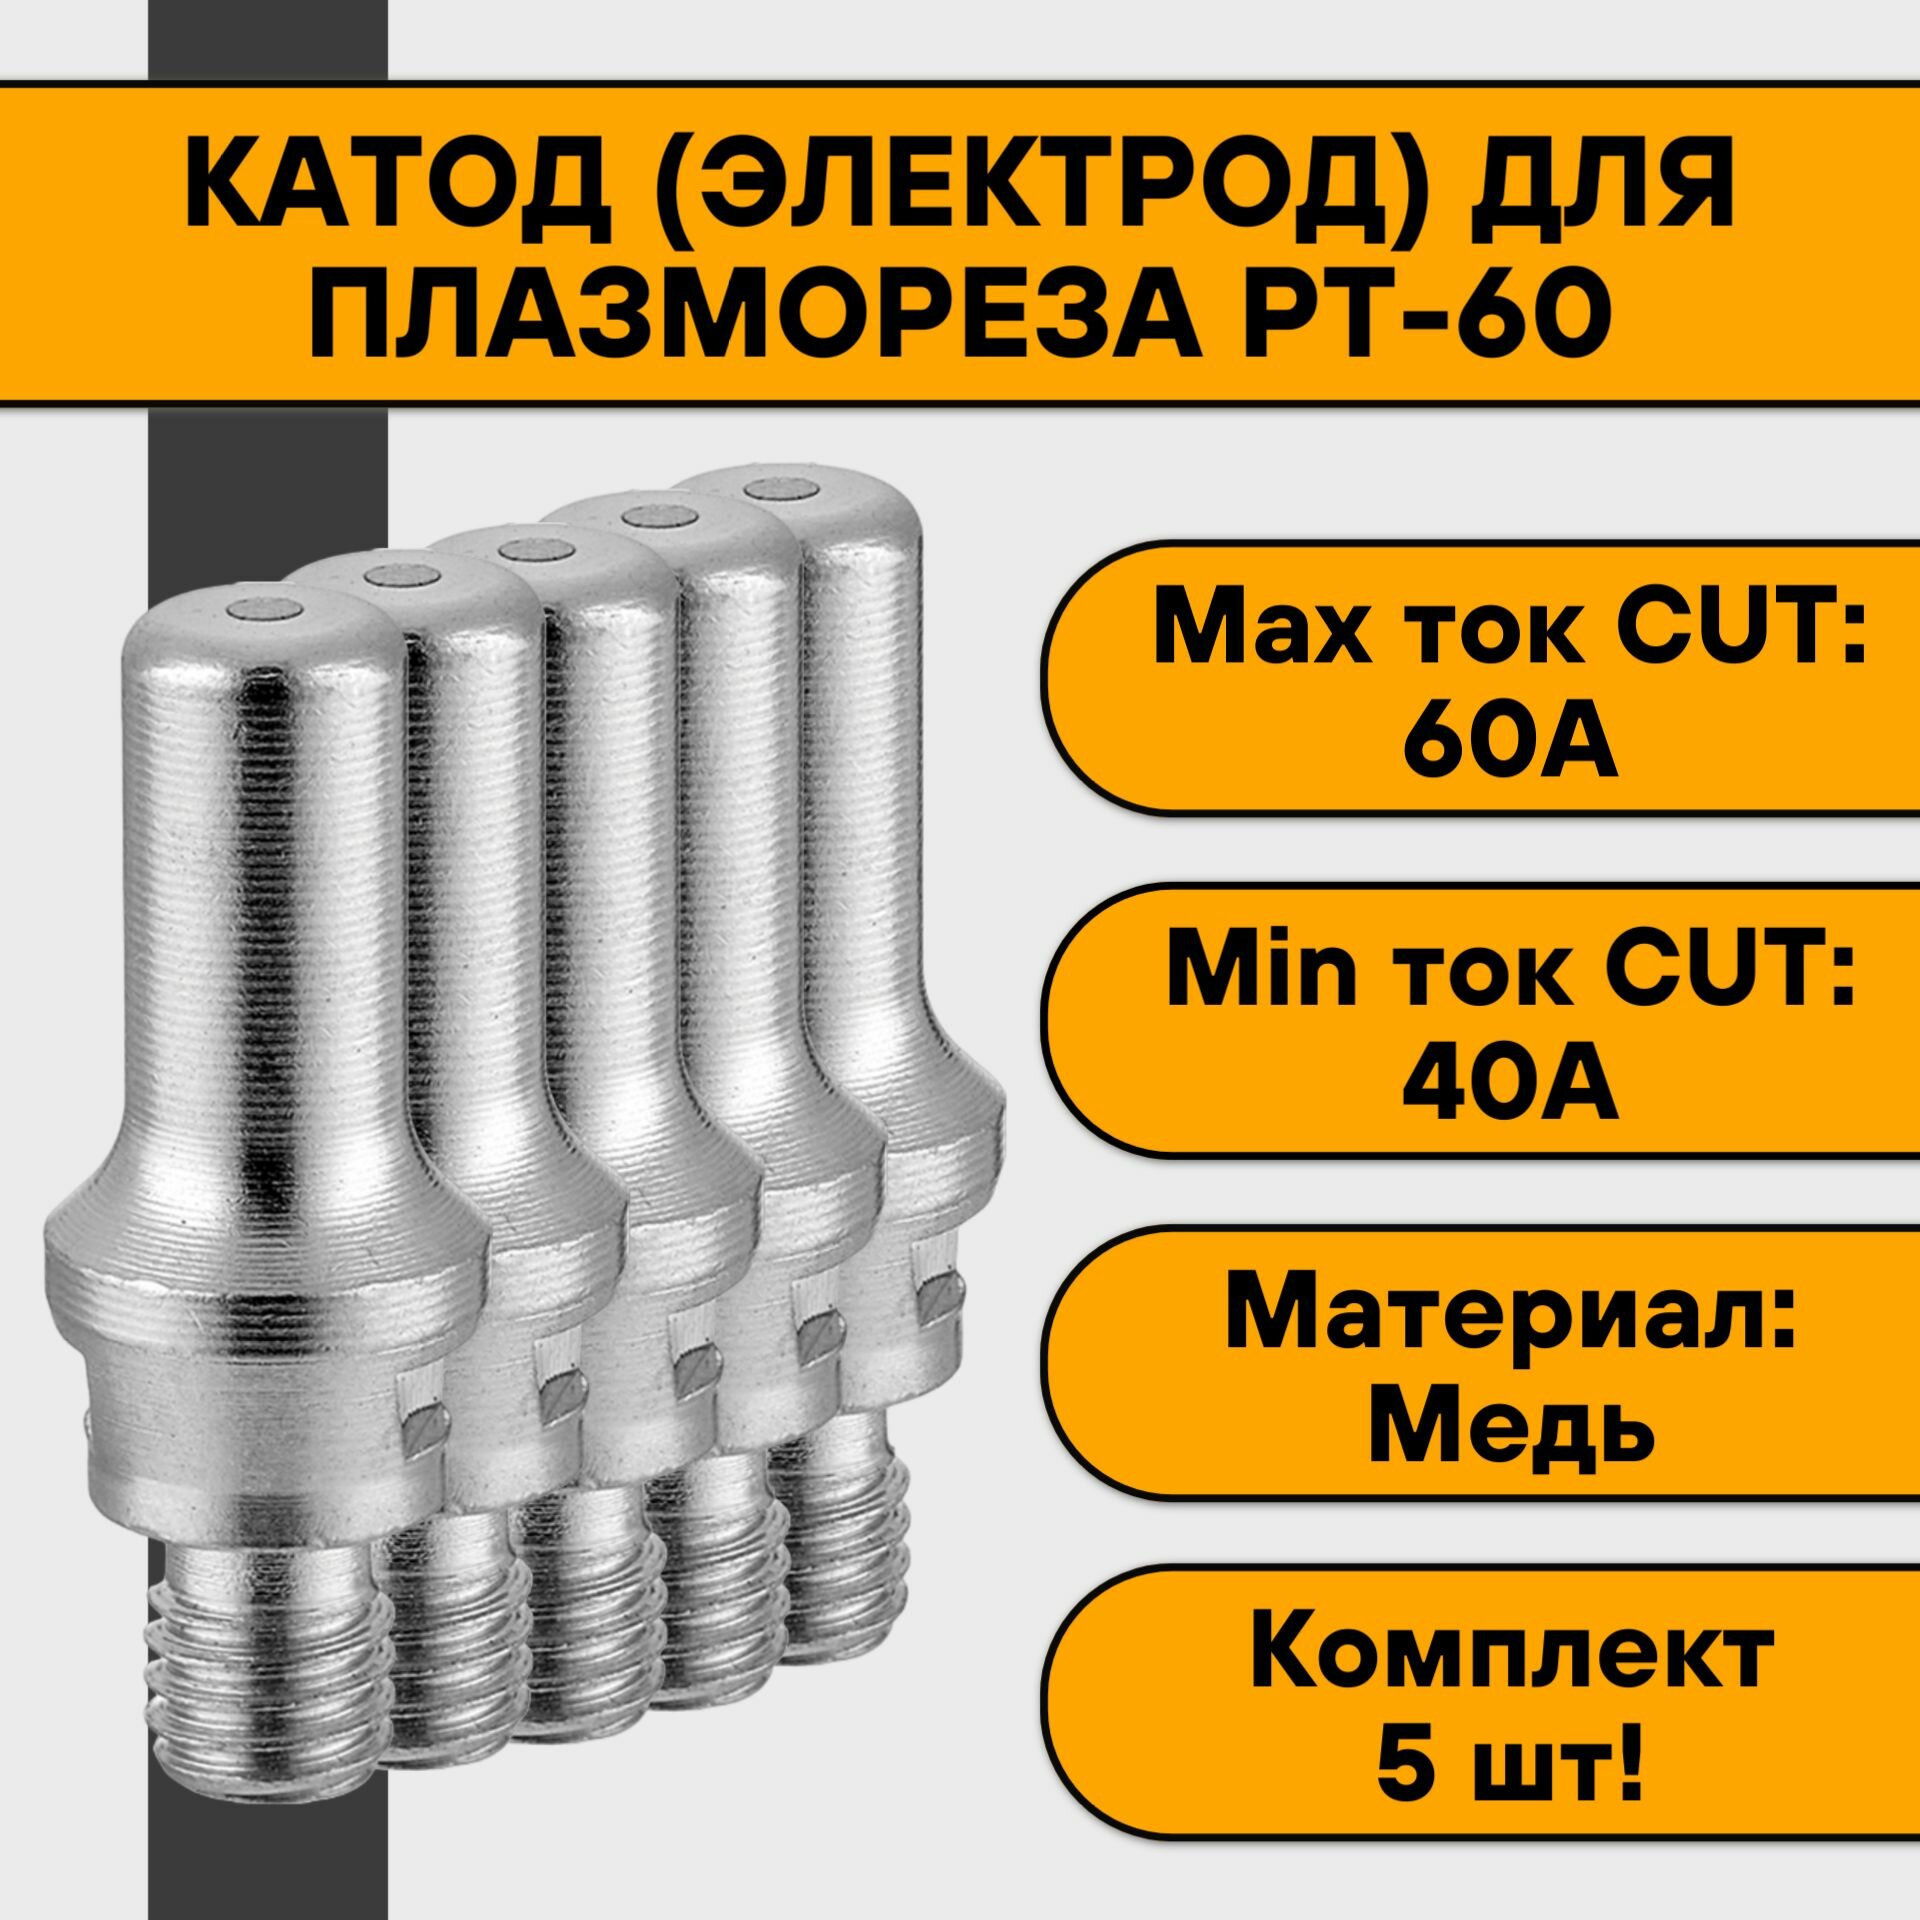 Катод (электрод) PT-60 для плазмореза (5 шт)